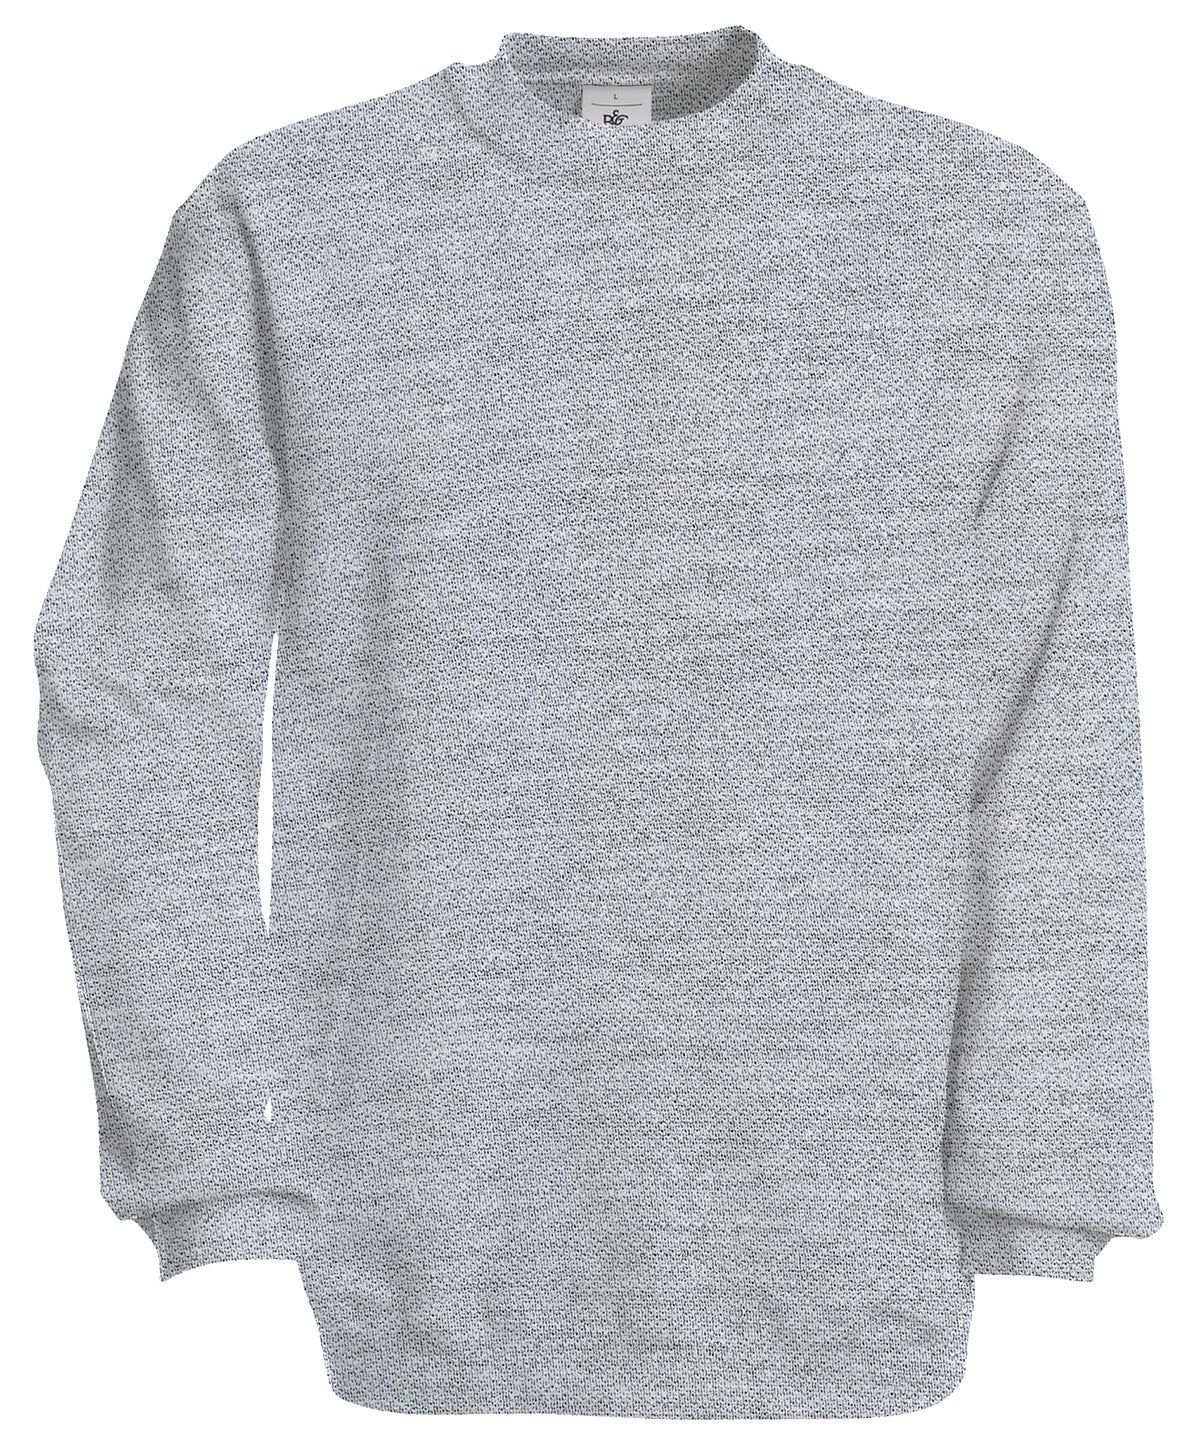 Personalised Sweatshirts - Black B&C Collection B&C Set-in sweatshirt